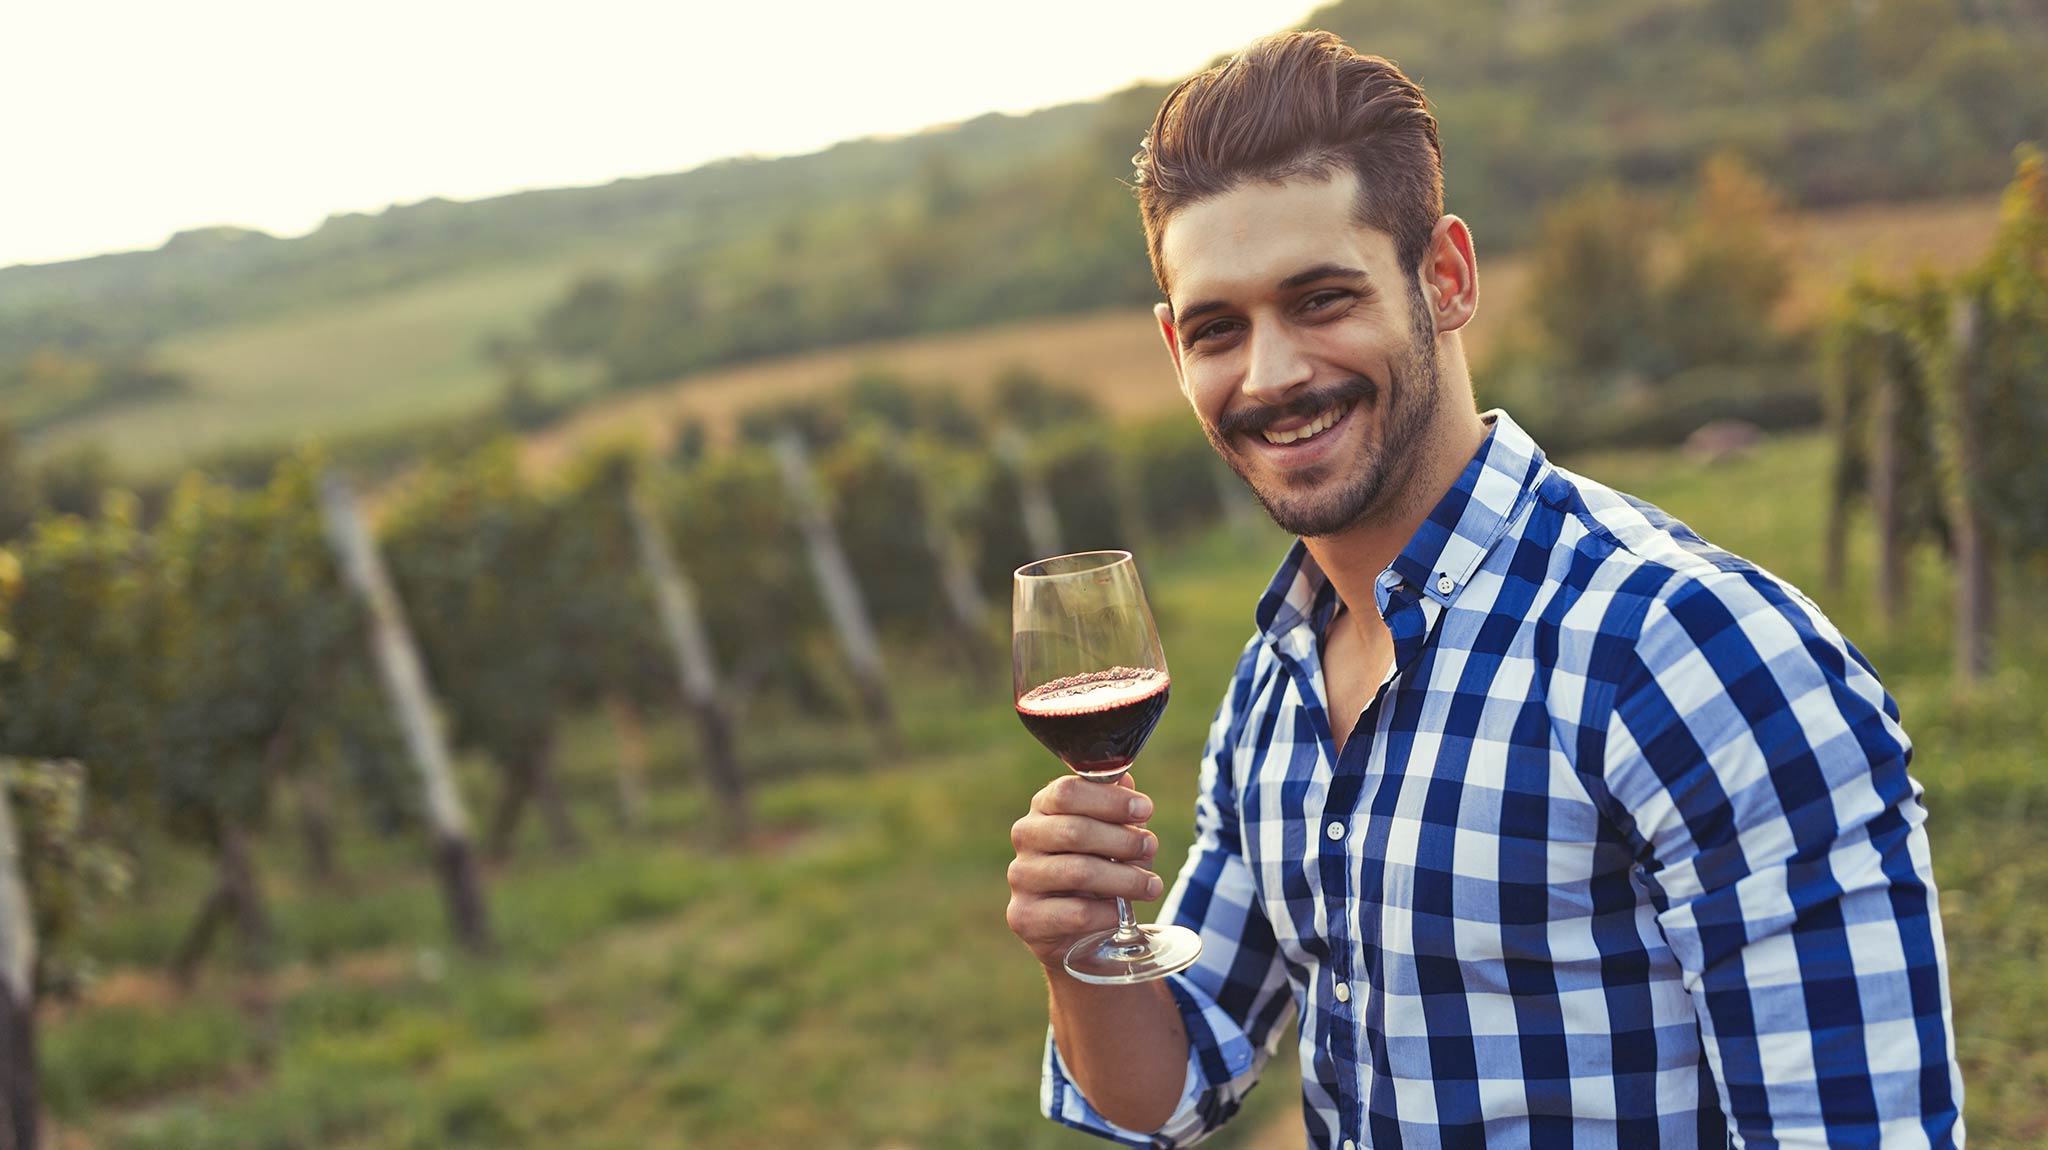 02-young-handsome-man-drinking-wine-in-vineyard283944069-1.jpg